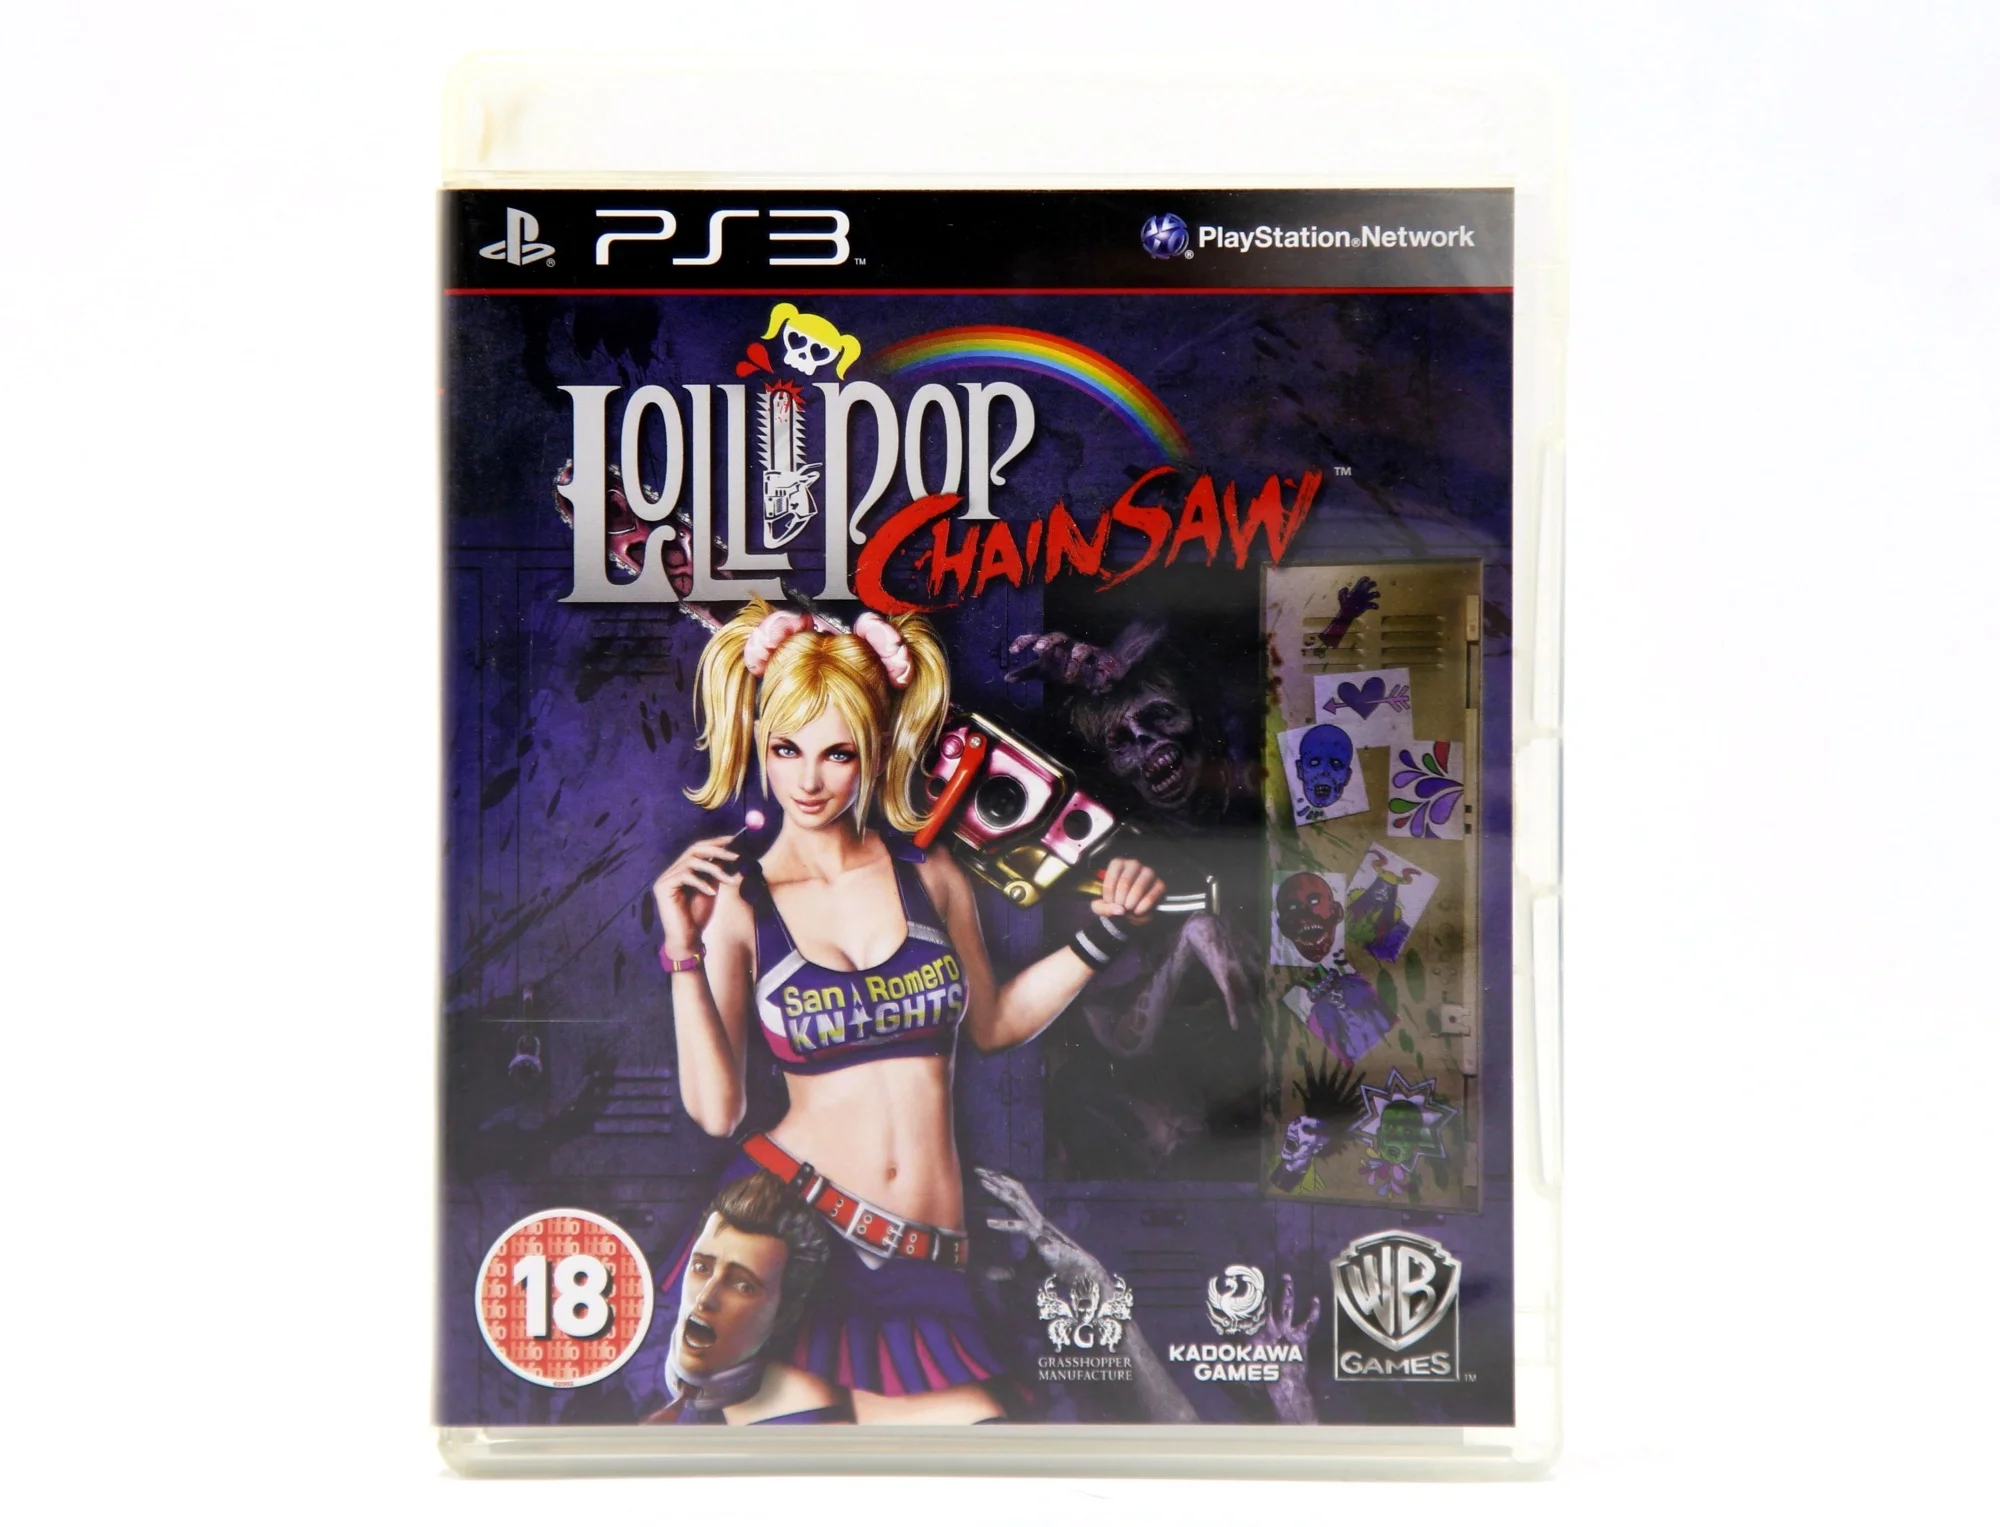 Lollipop ps3. Lollipop Chainsaw ps3. Игра Lollipop Chainsaw. PLAYSTATION 3 Lollipop Chainsaw. Lollipop Chainsaw Xbox 360.